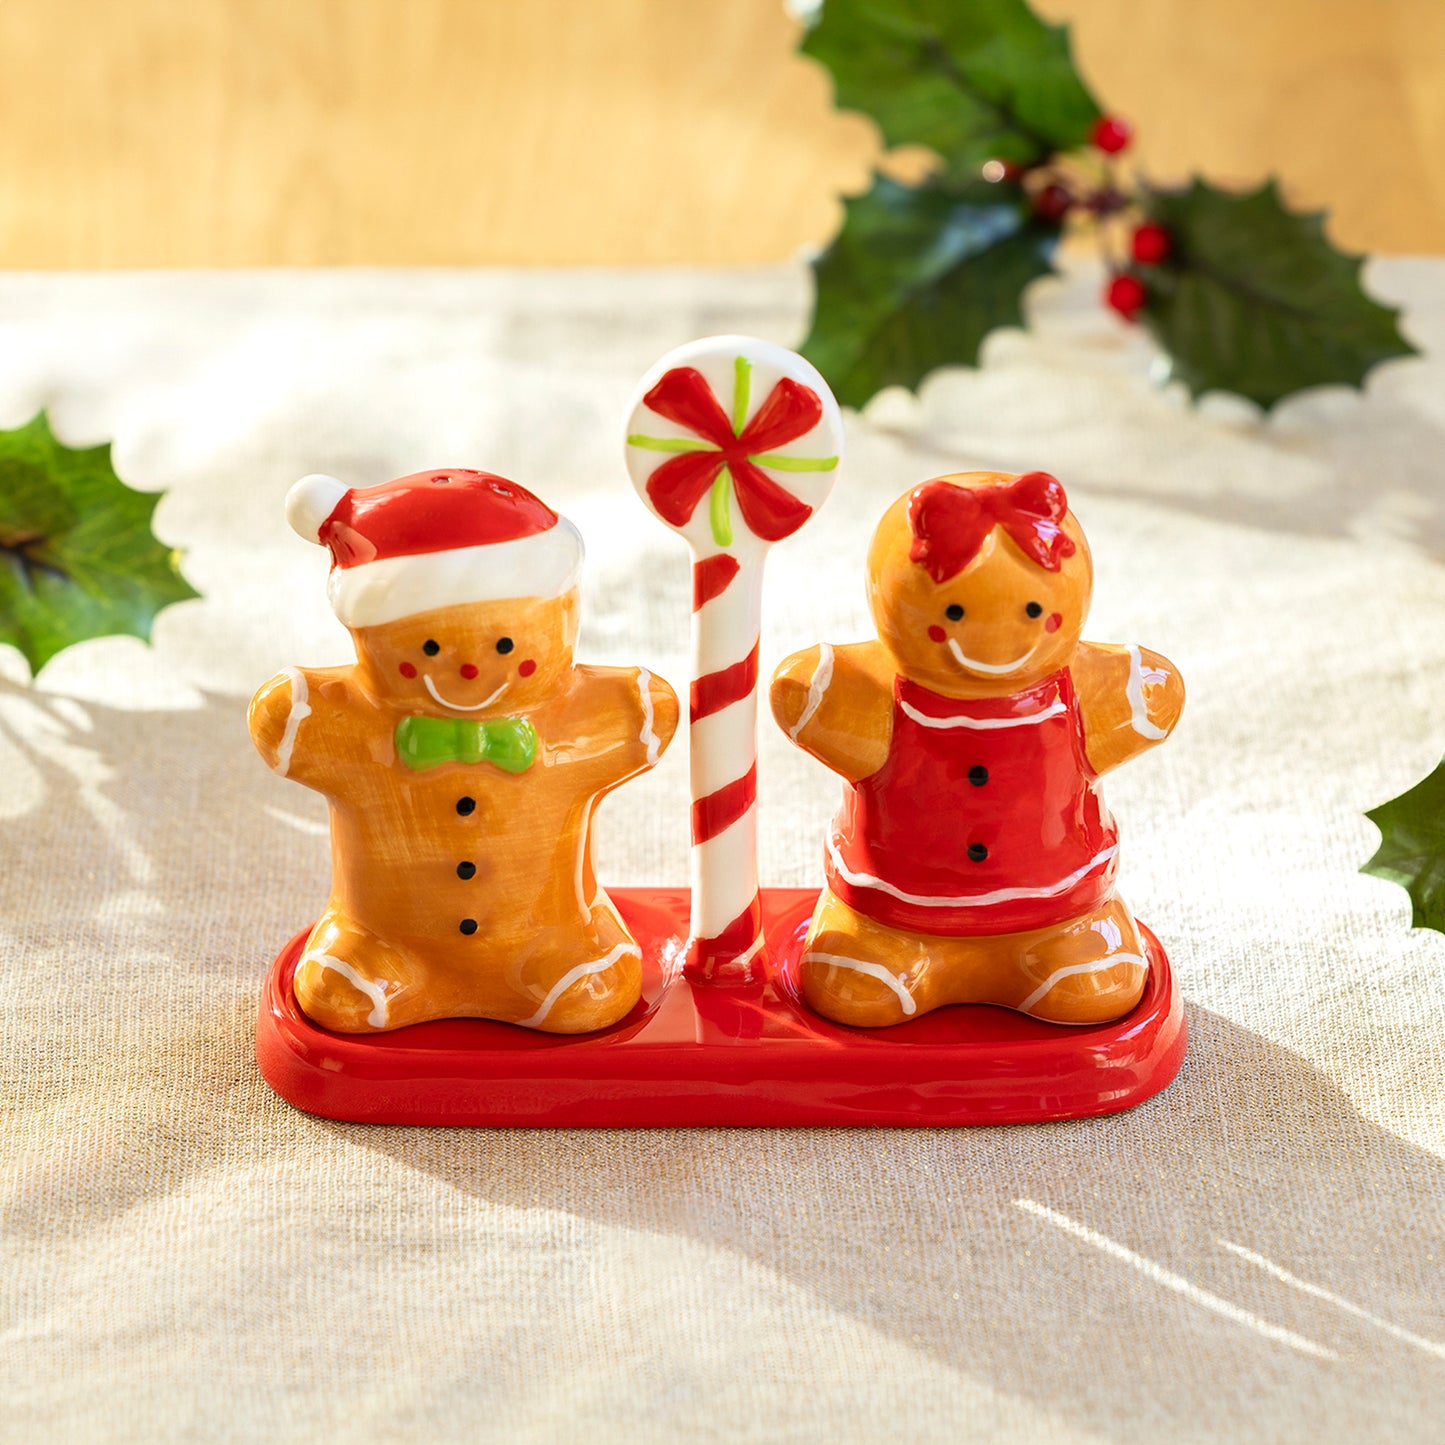 Gift Boxed Gingerbread Figurine Salt and Pepper Shaker Set